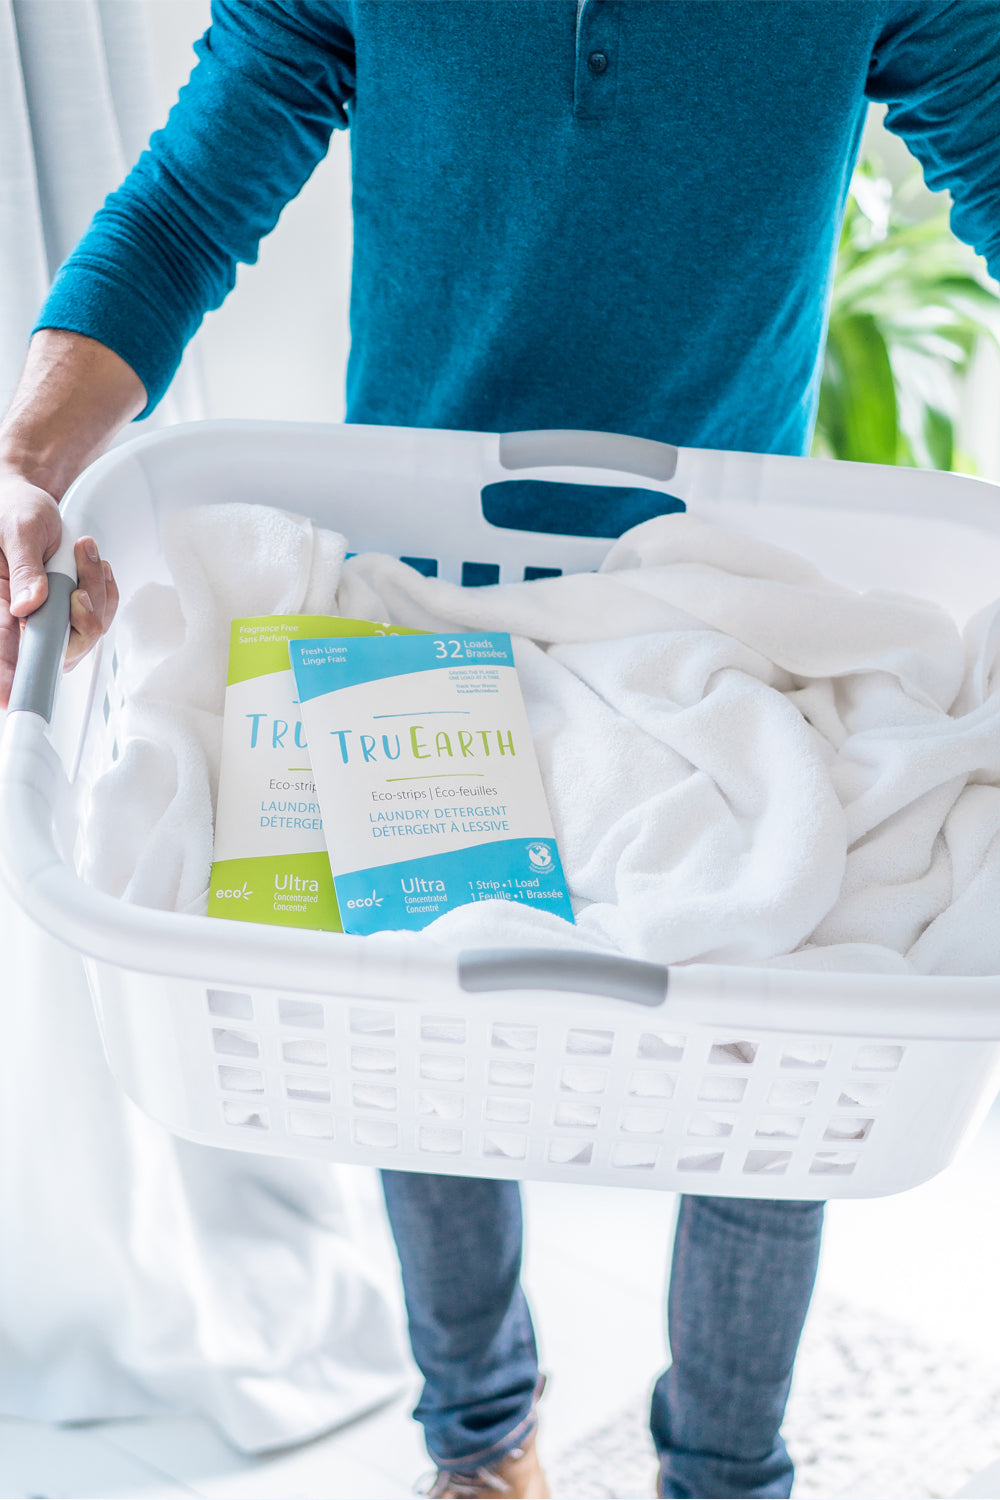 TRU EARTH - Eco-strip Laundry Detergent